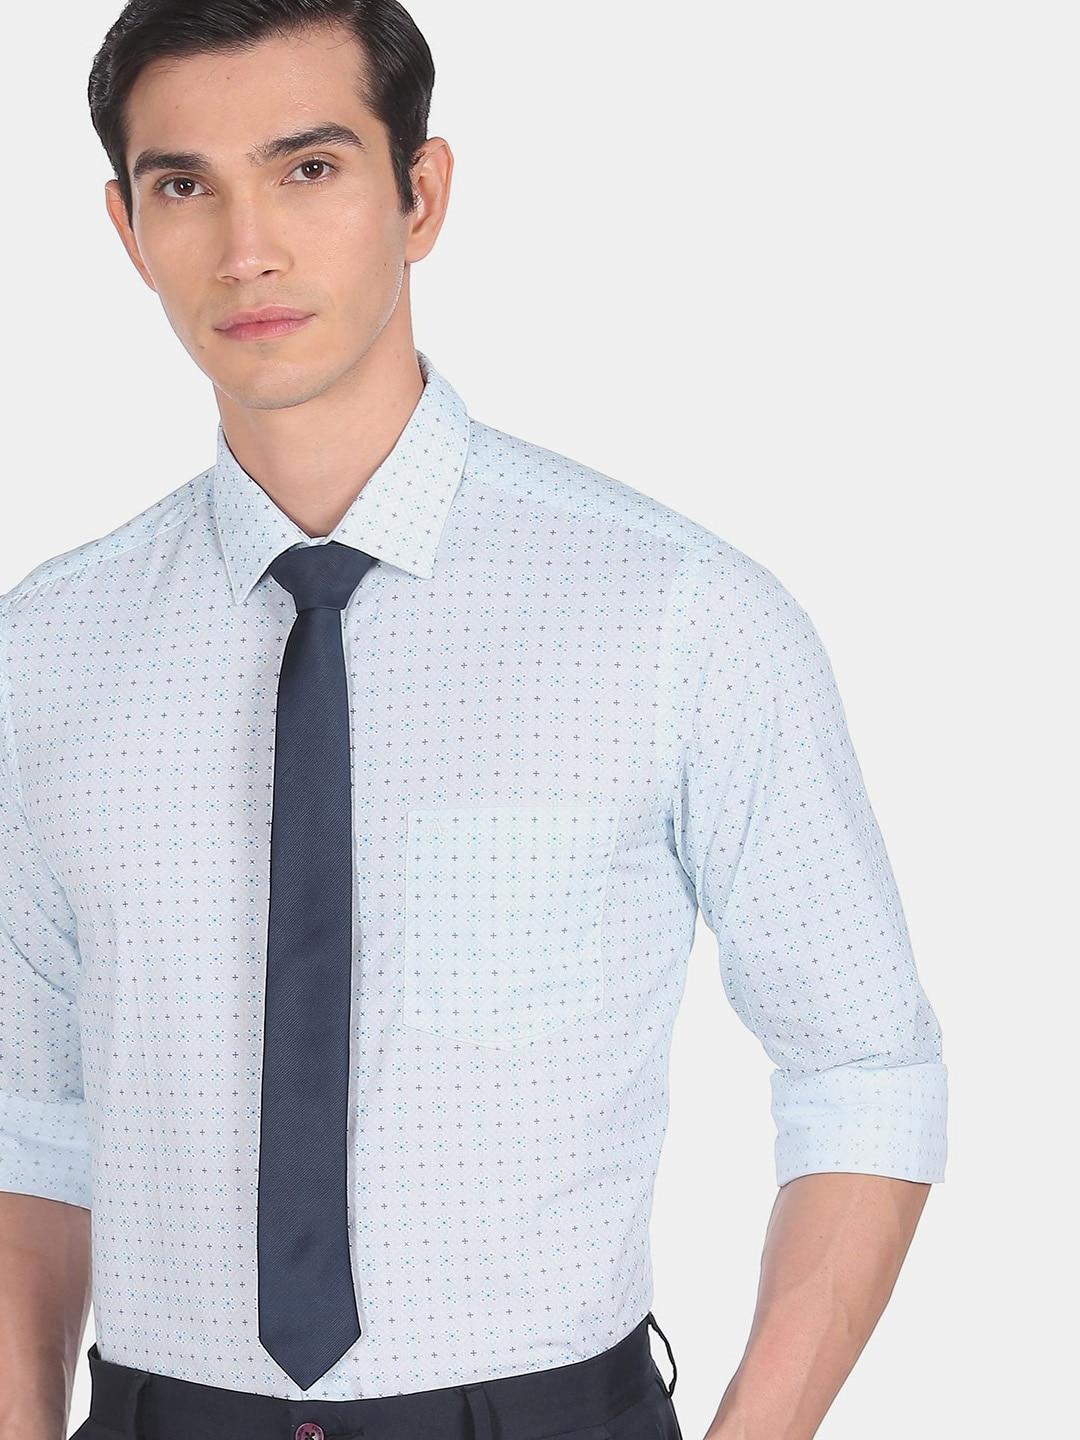 arrow-sport-men-light-blue-slim-fit-geometric-printed-casual-shirt